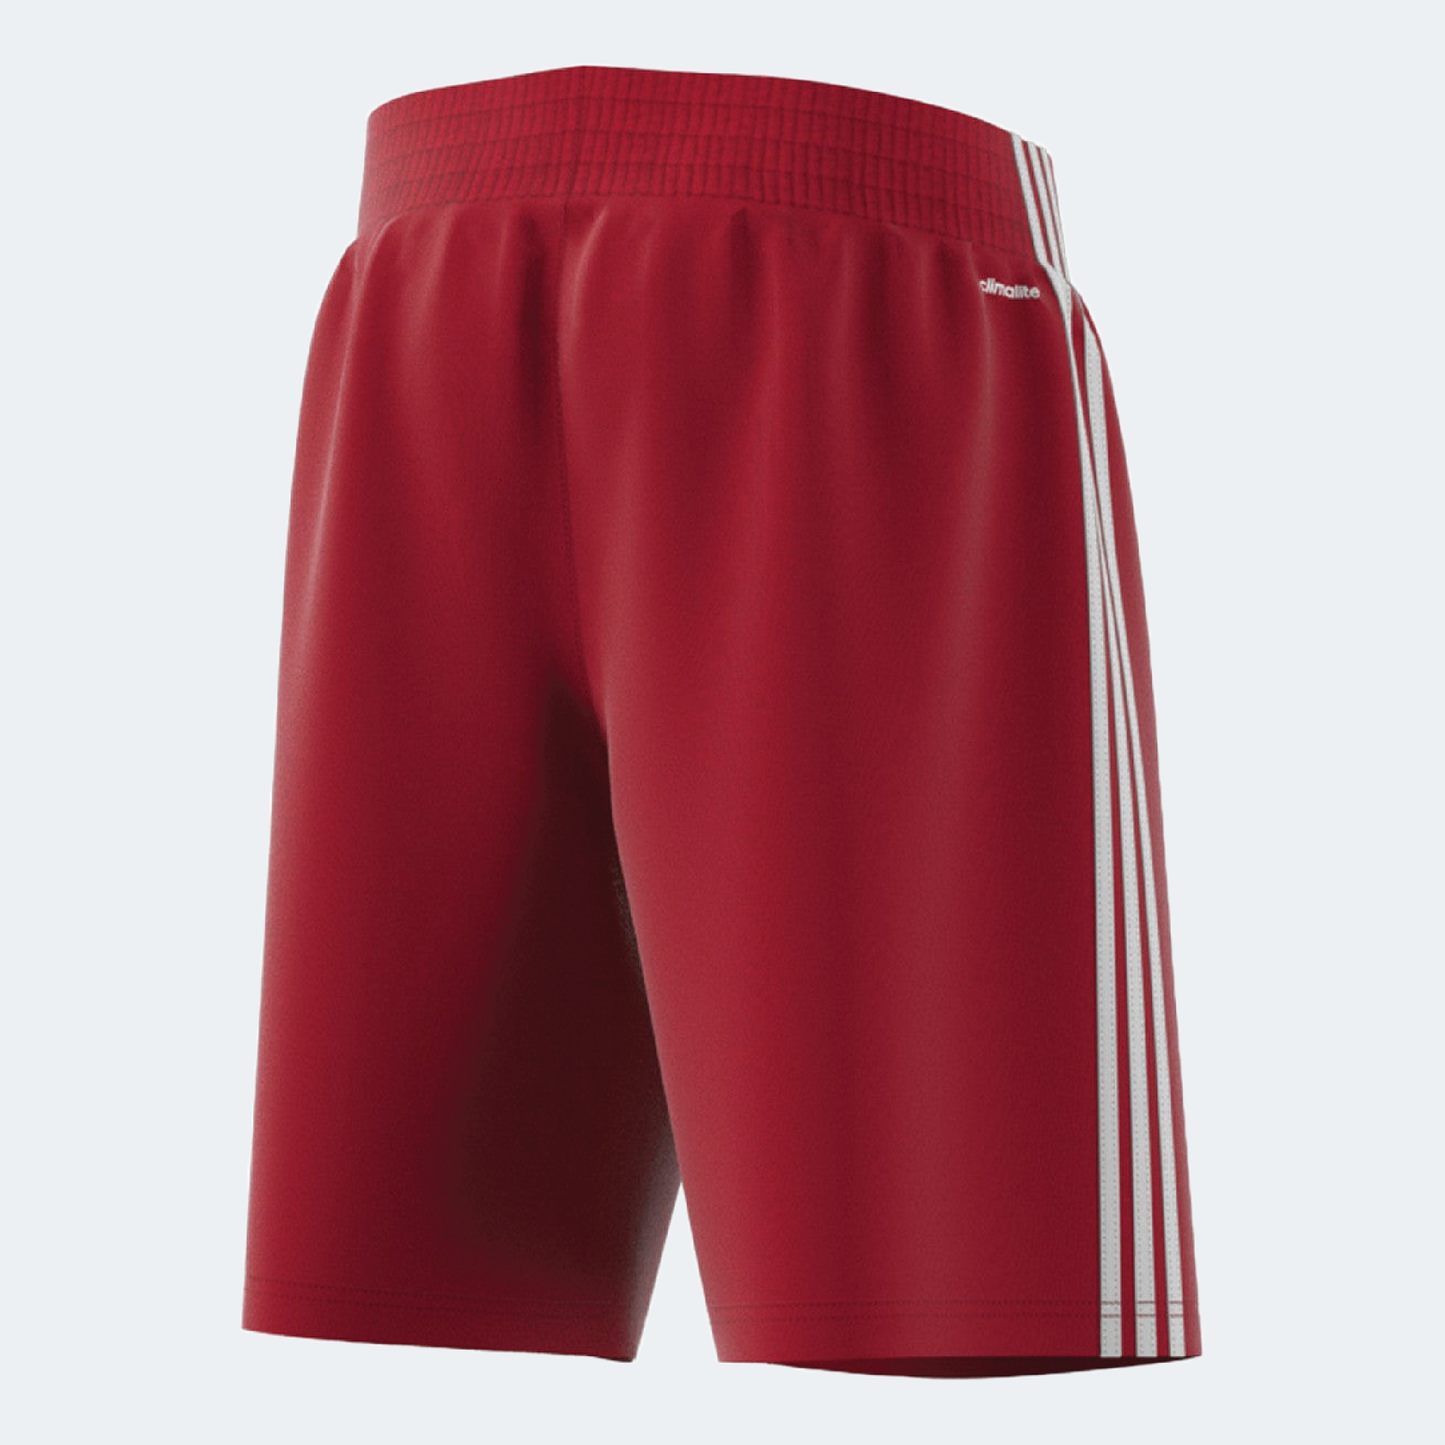 adidas 3-STRIPES PRACTICE Shorts | Red-White | Men's